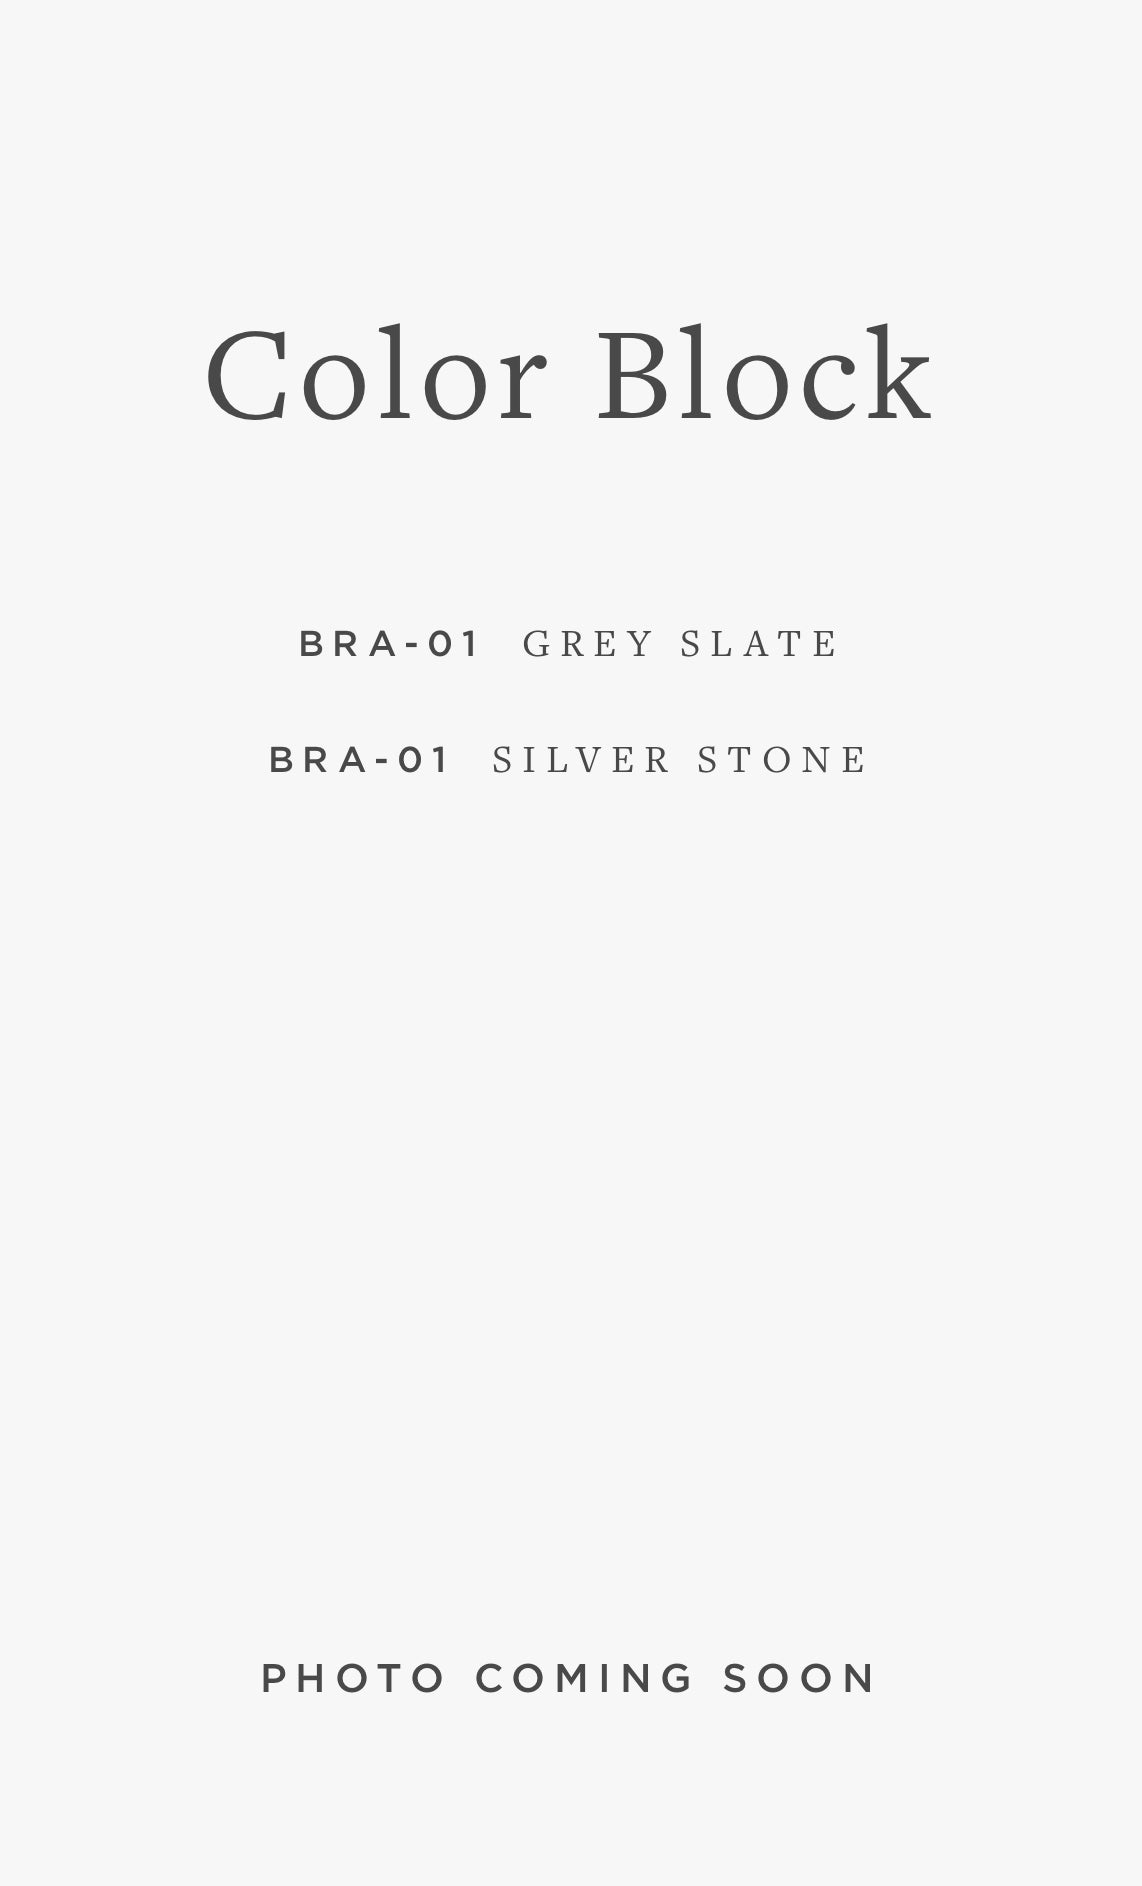 BRA-01 COLOR BLOCK / 01